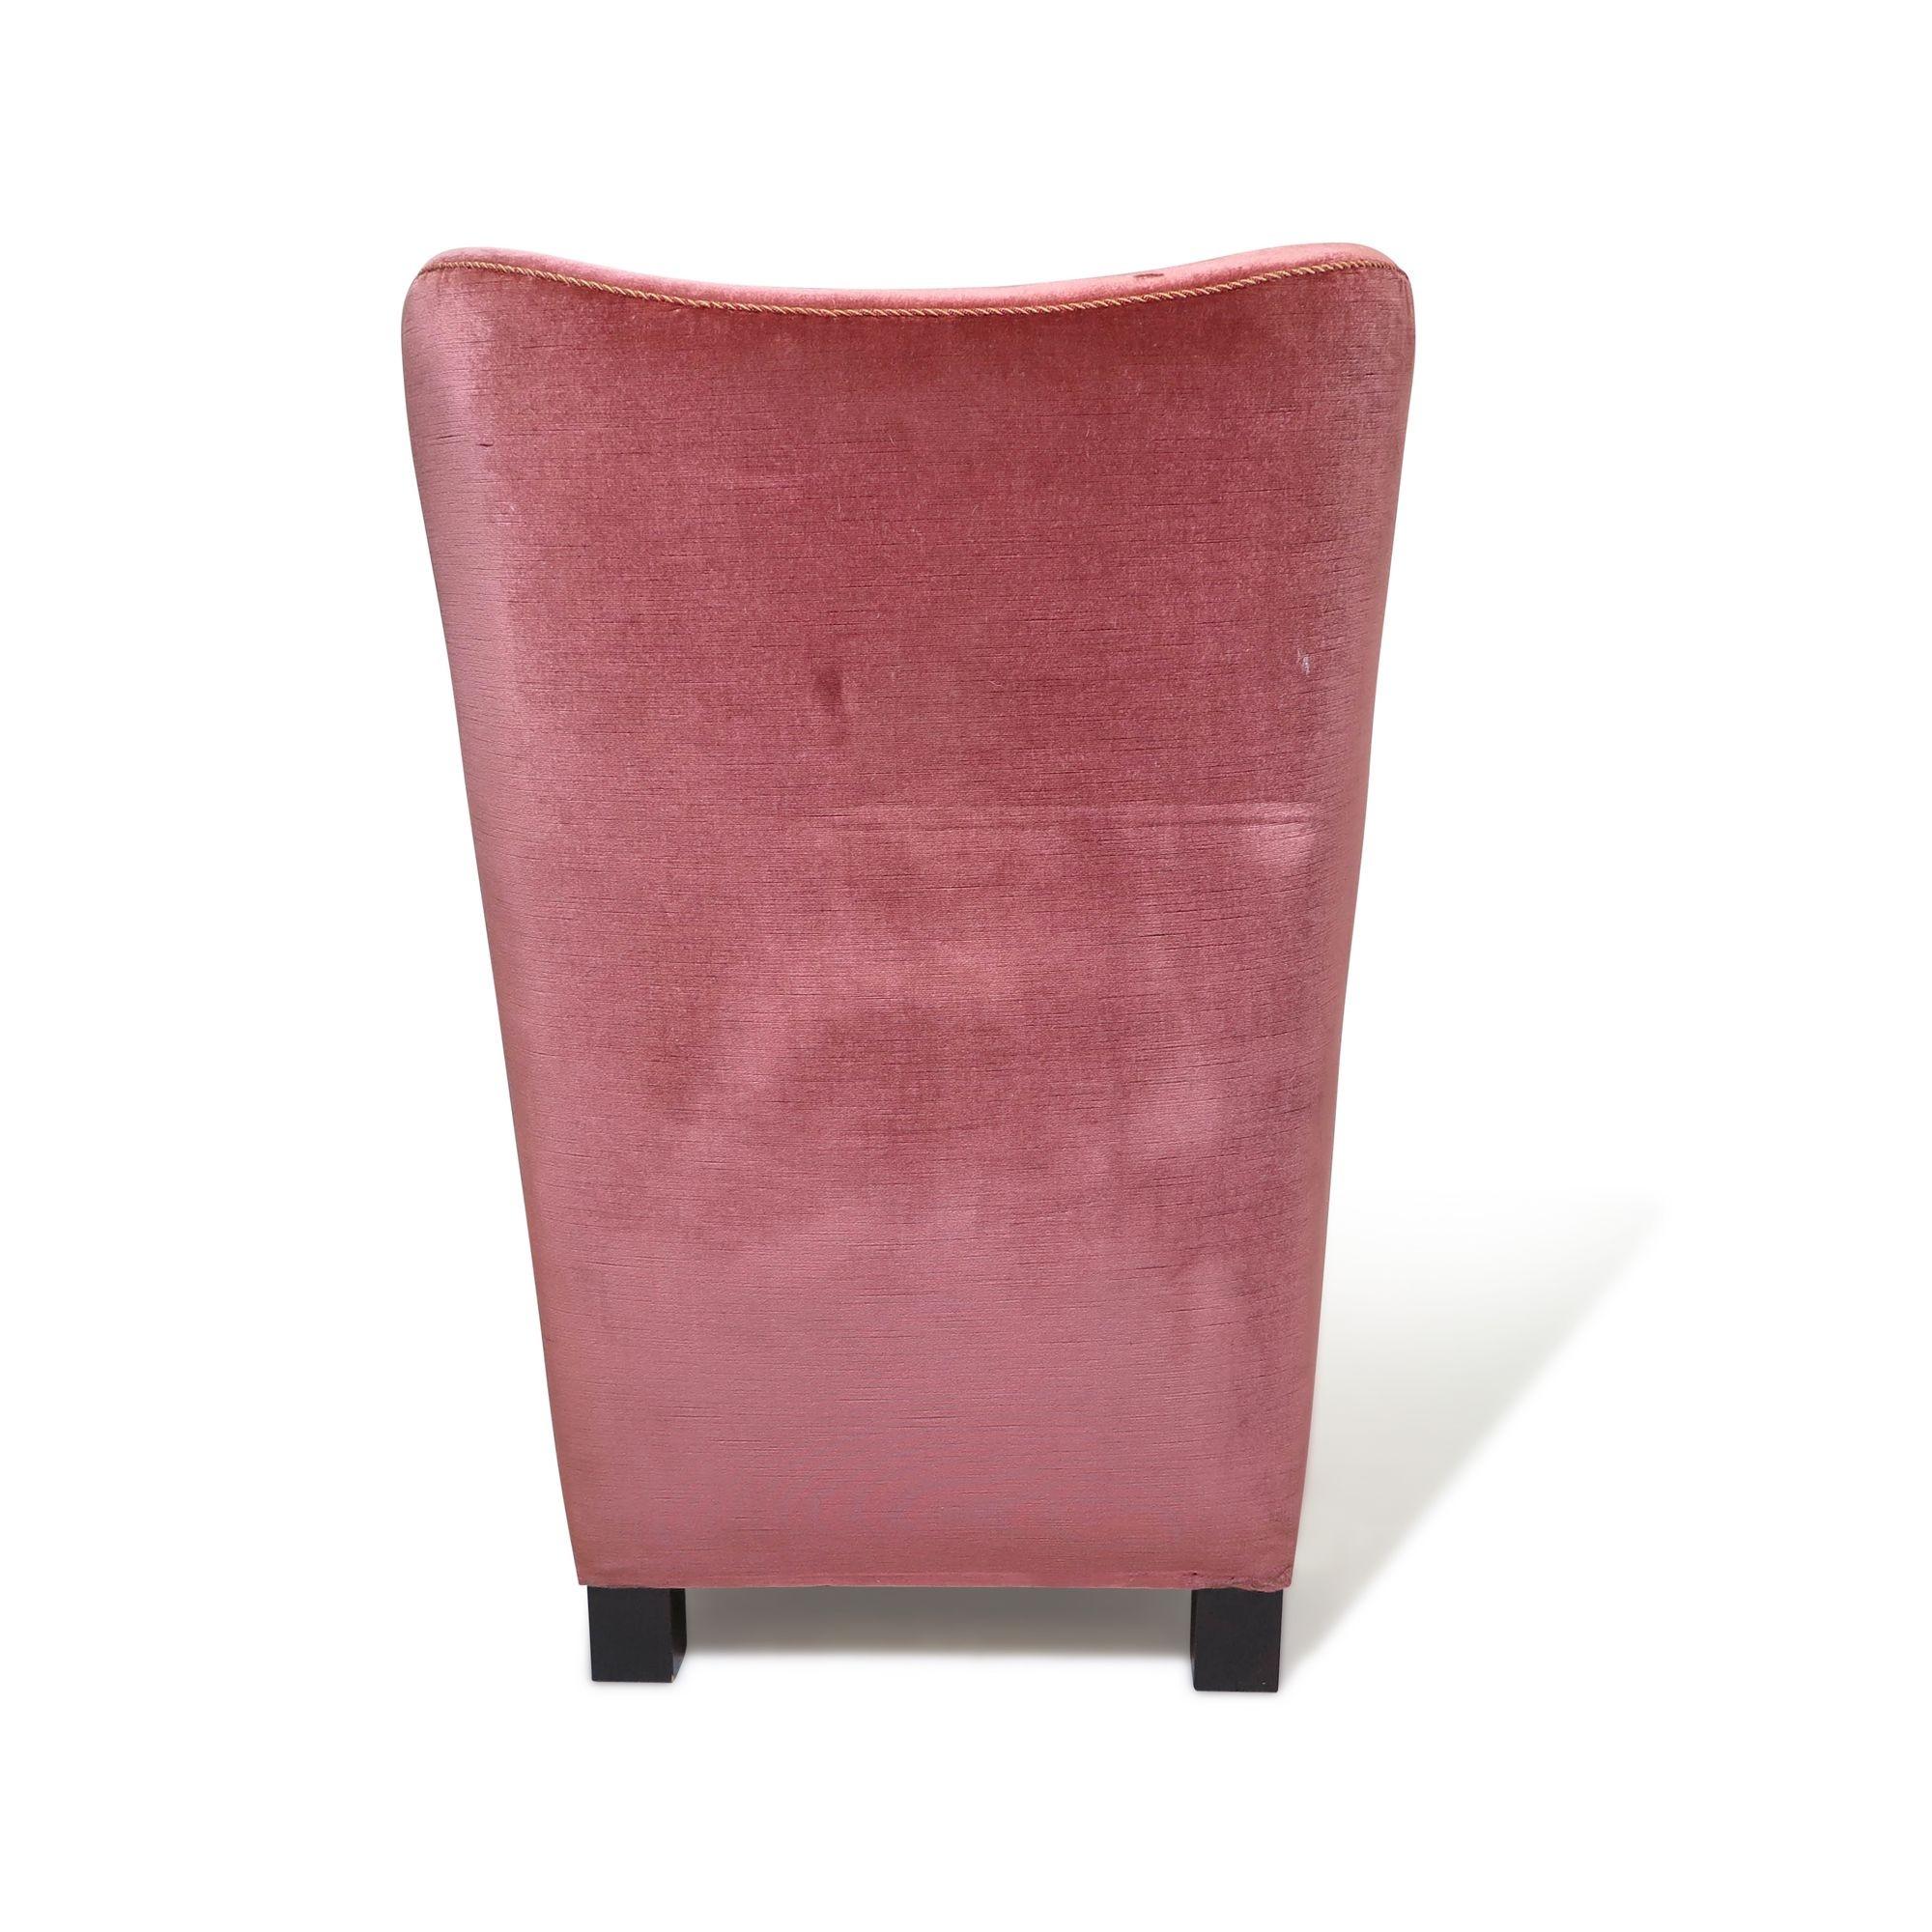 1942 Fritz Hansen High-back Lounge Chair #1672 in Original Mohair For Sale 1